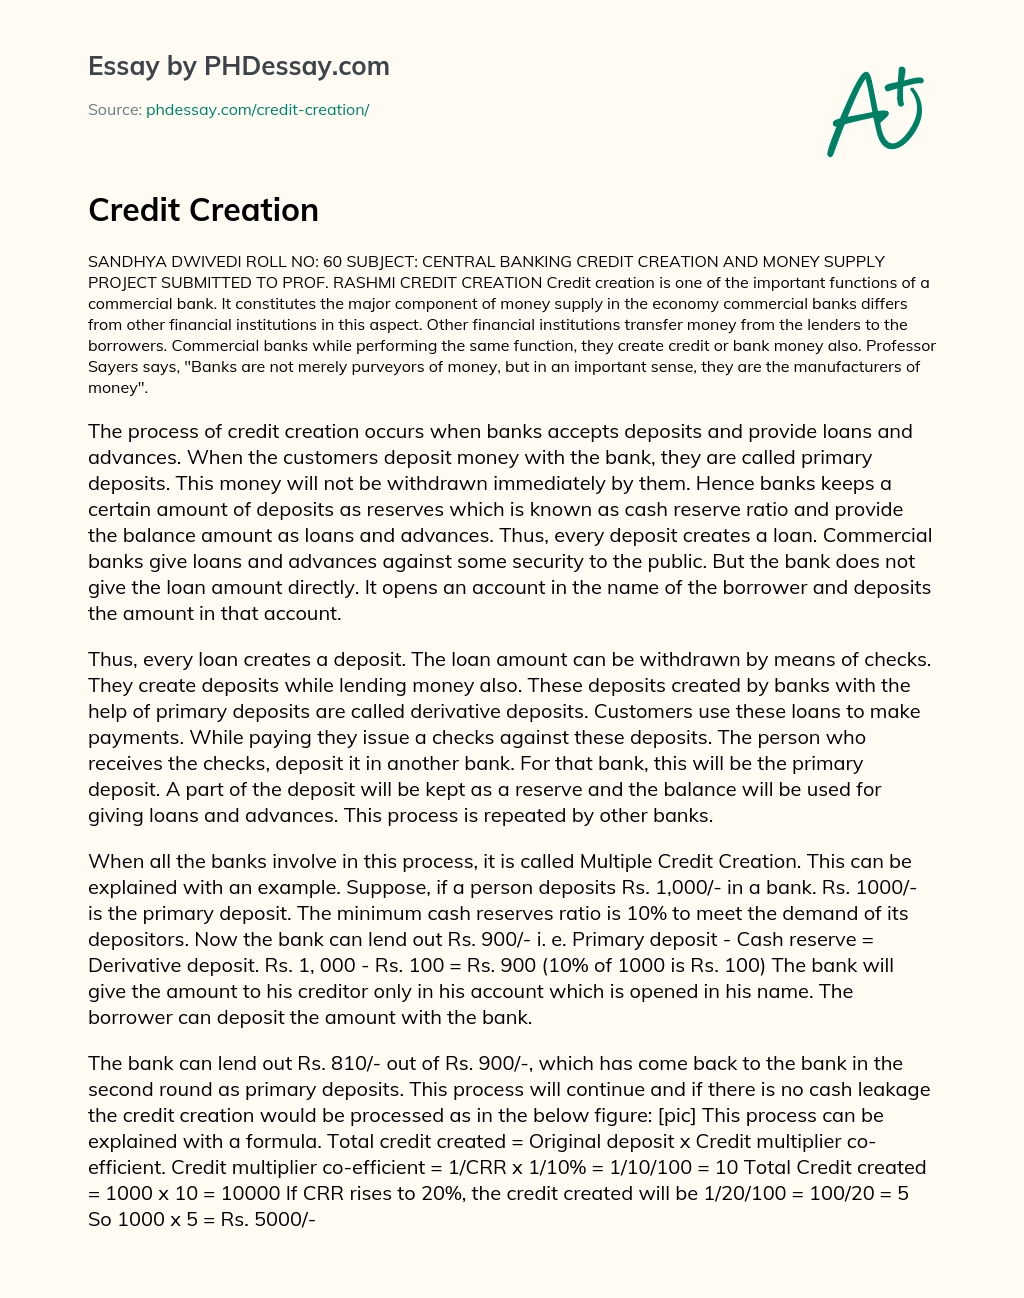 Credit Creation essay